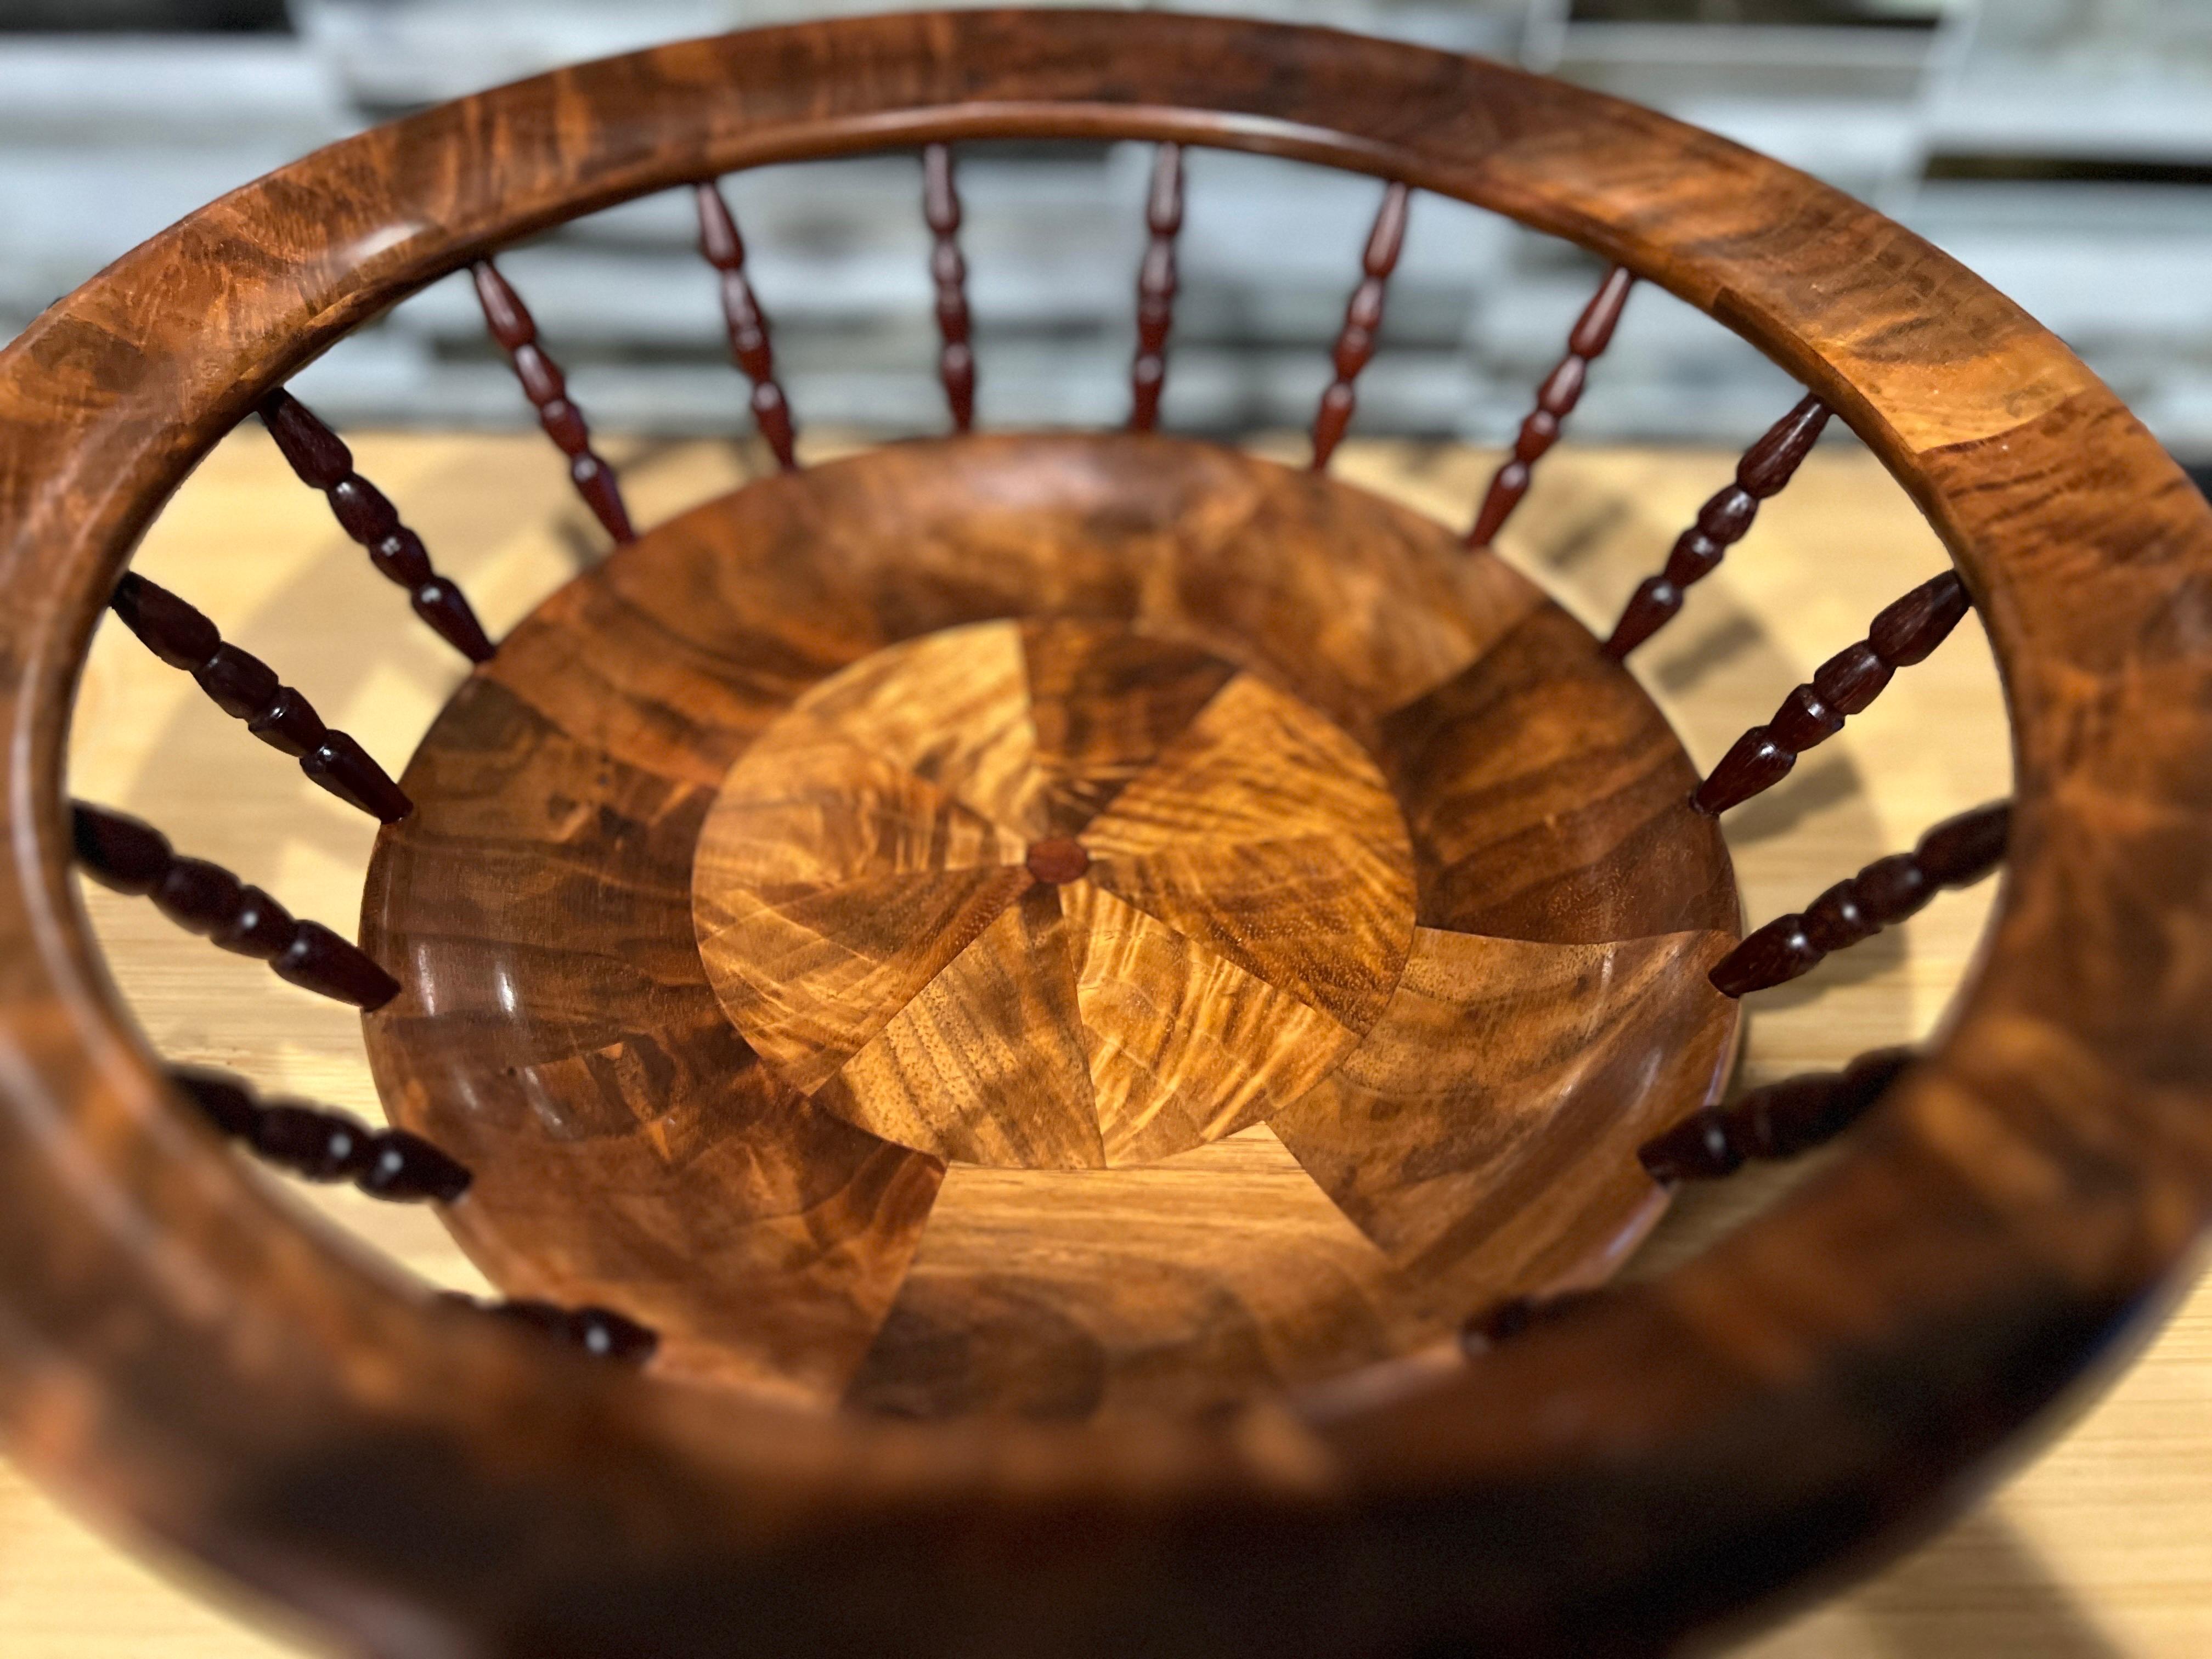 American Black Walnut & Blood Wood Studio Turned Wood Fruit Bowl - Signed For Sale